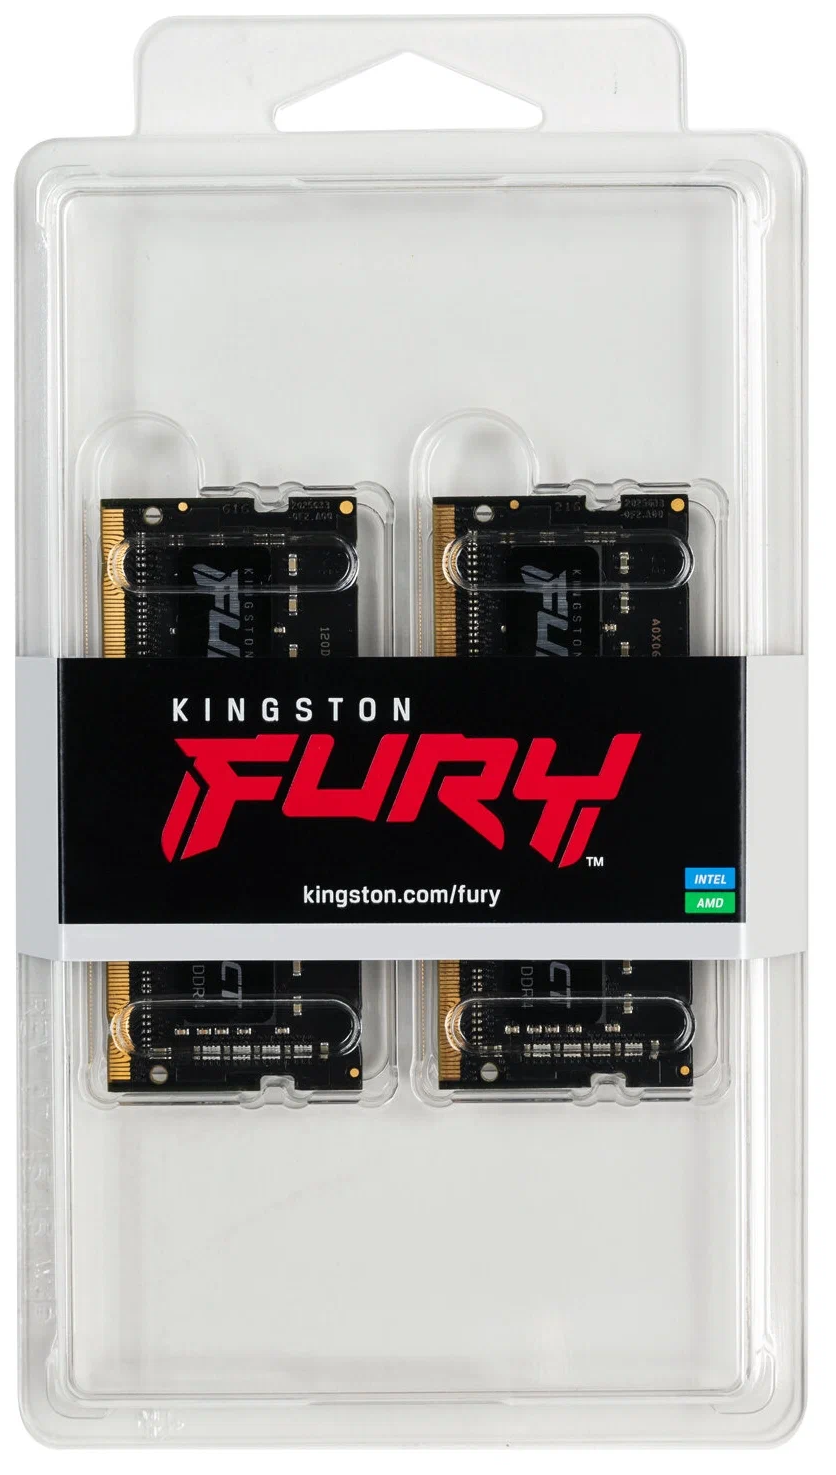 Оперативная память DDR4 Kingston - фото №3